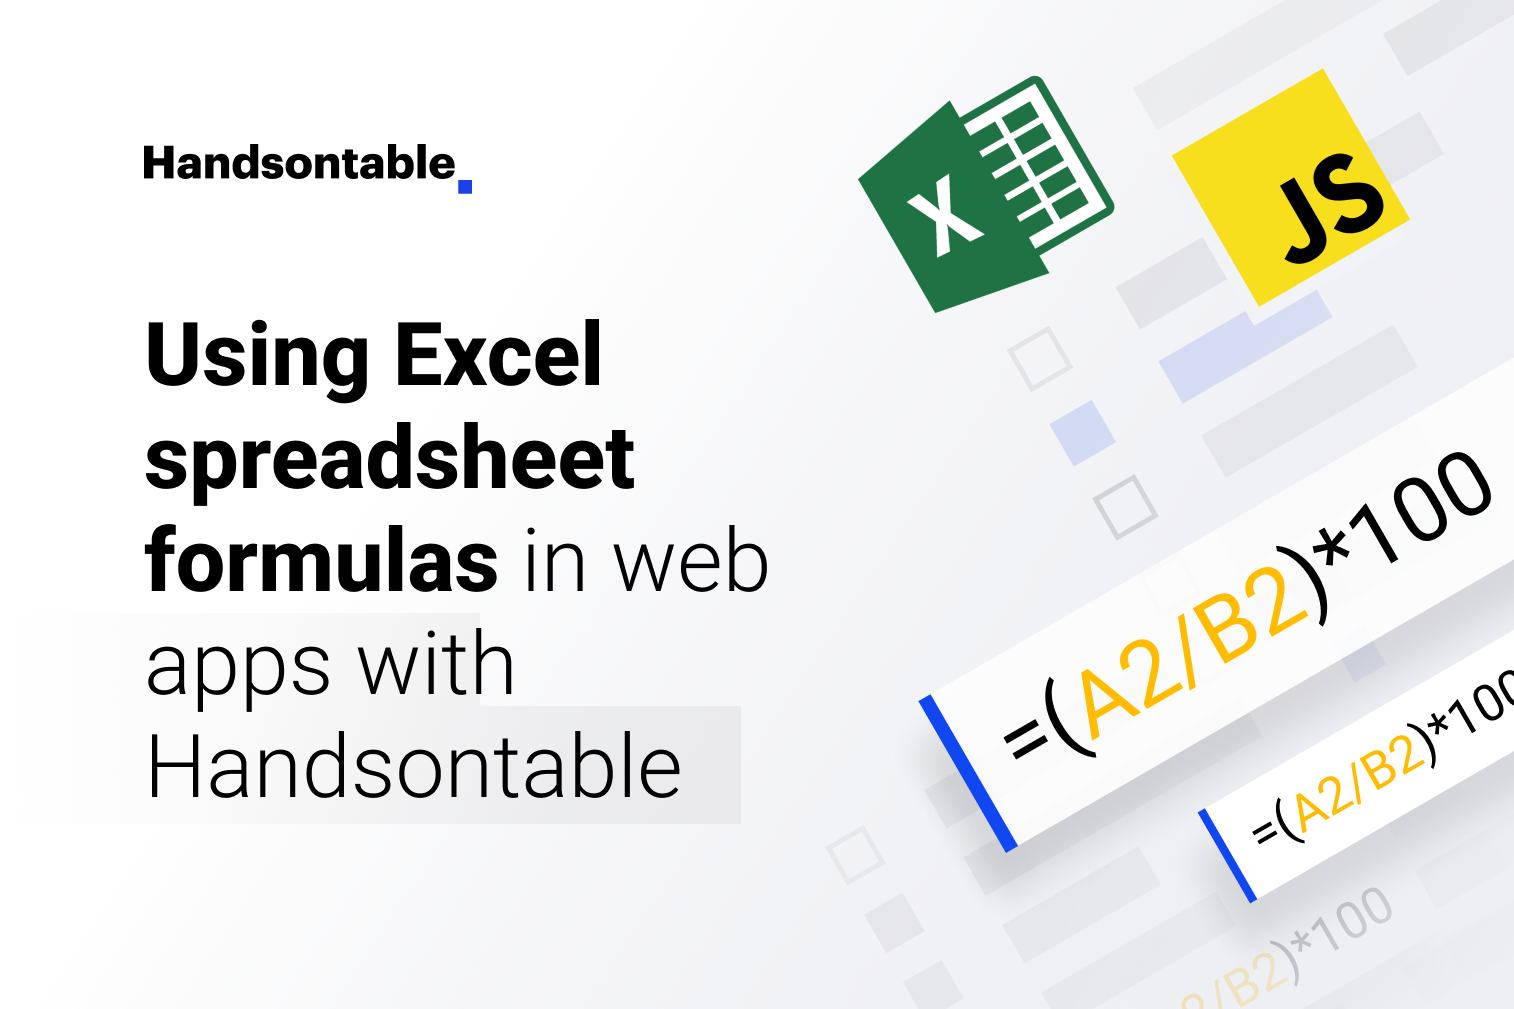 Illustration for a blog post - Using Excel spreadsheet formulas in web apps with Handsontable